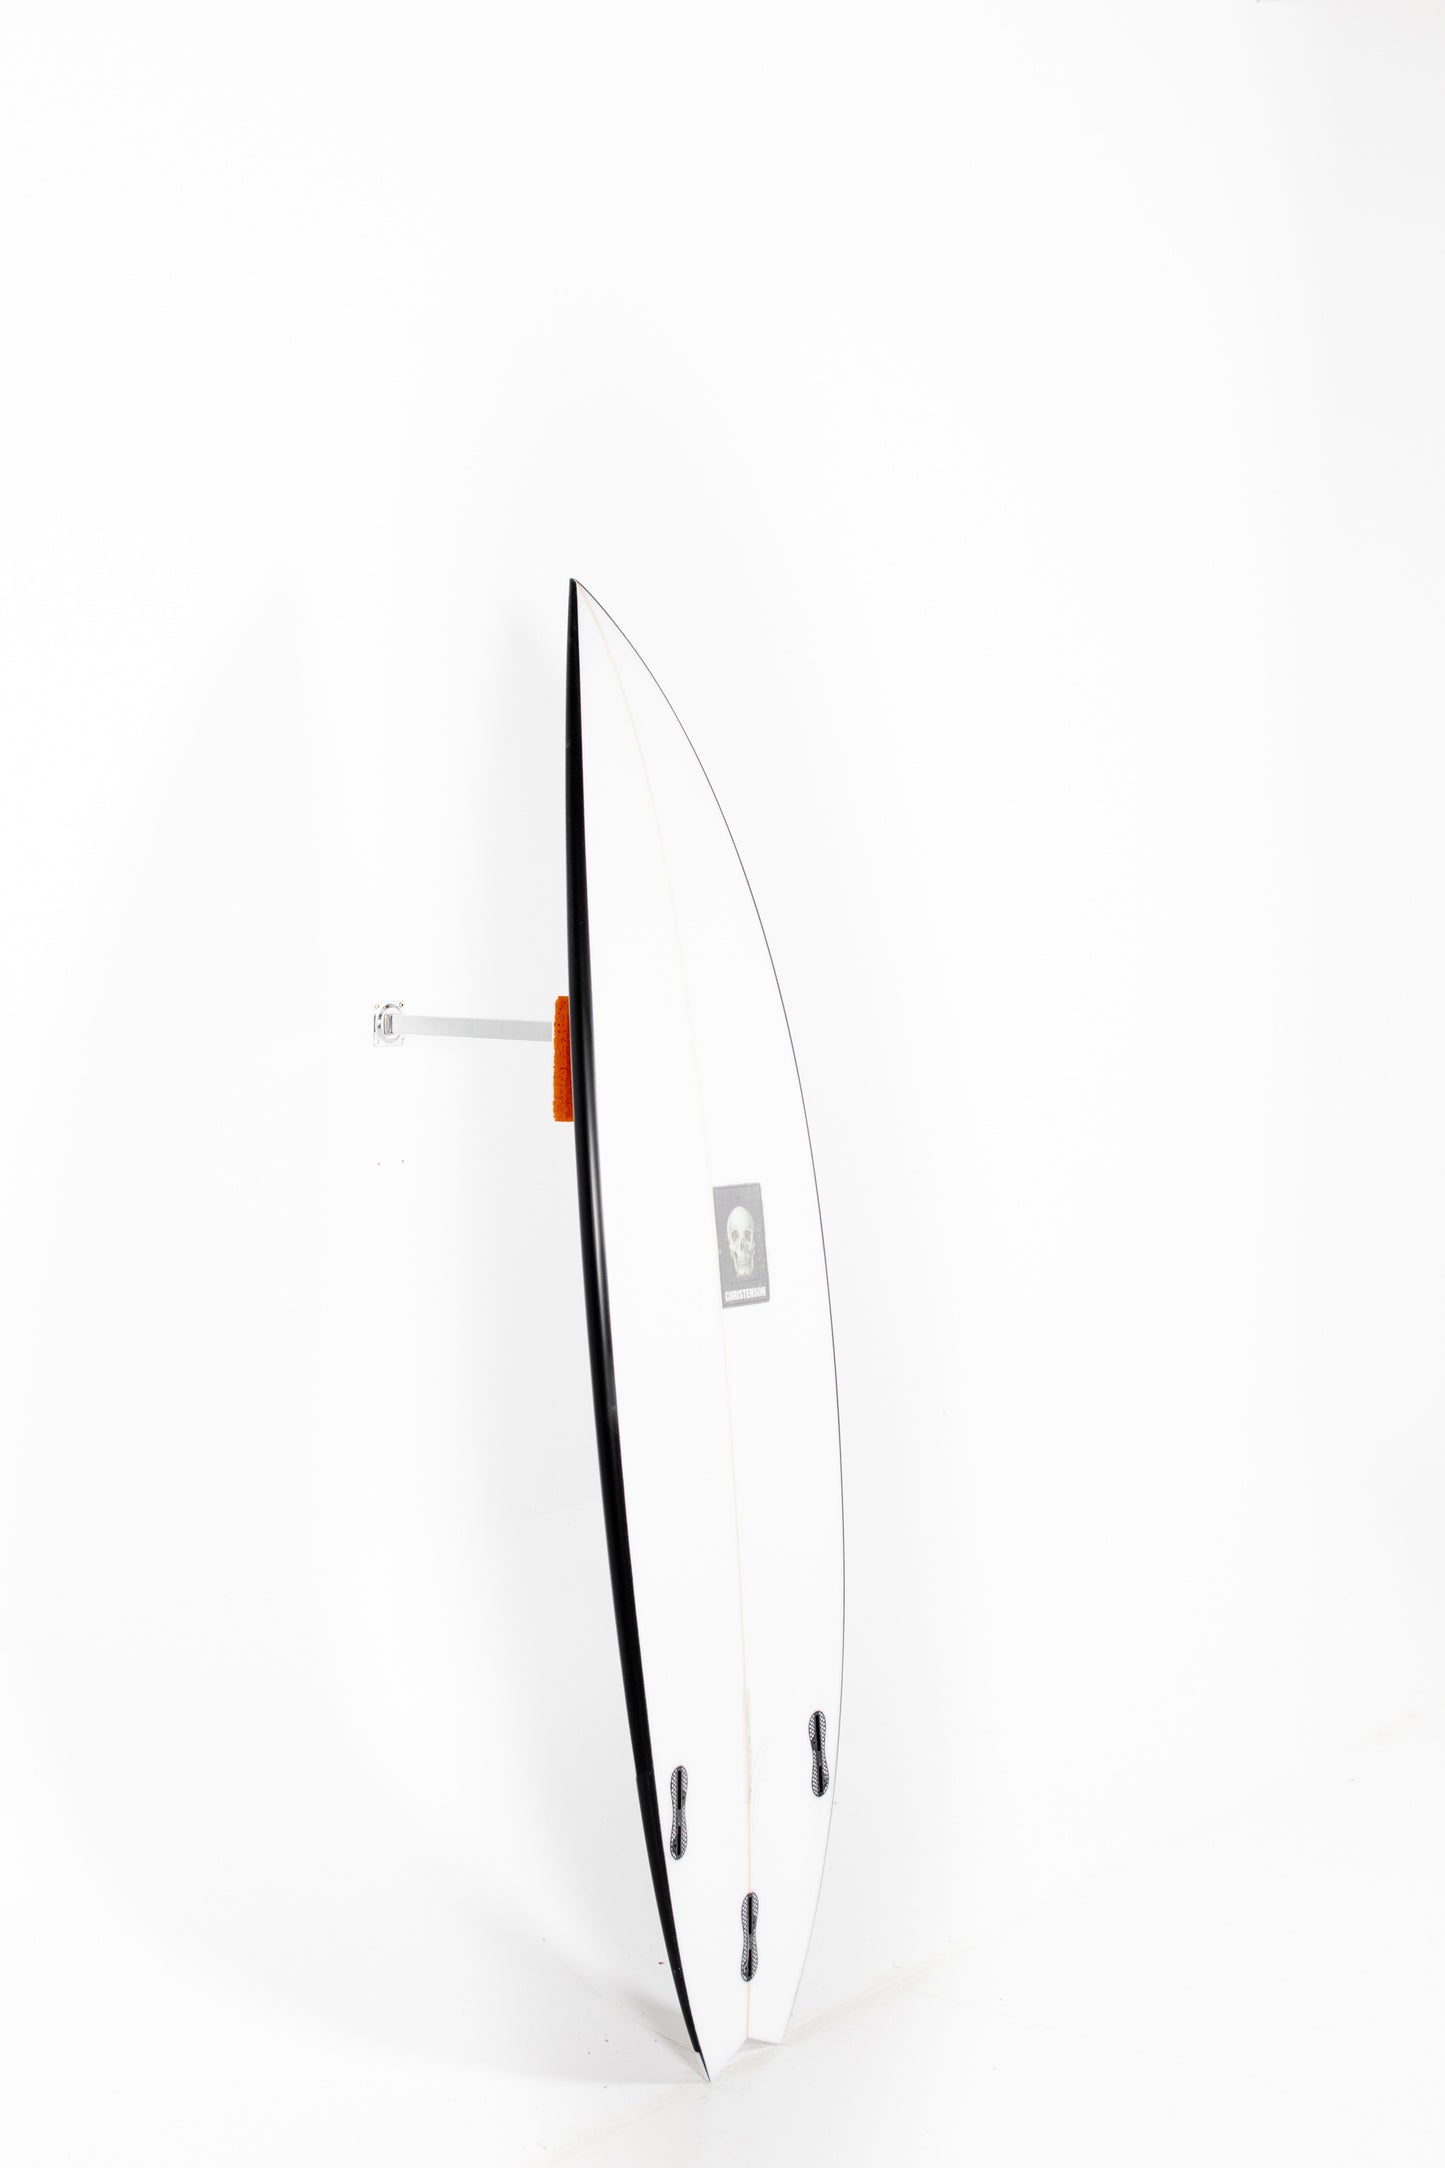 
                  
                    Pukas Surf Shop - Chris Christenson Surfboard  - GERR by Chris Christenson - 6’0” x 19 1/4 x 2 3/8 - CX03369
                  
                